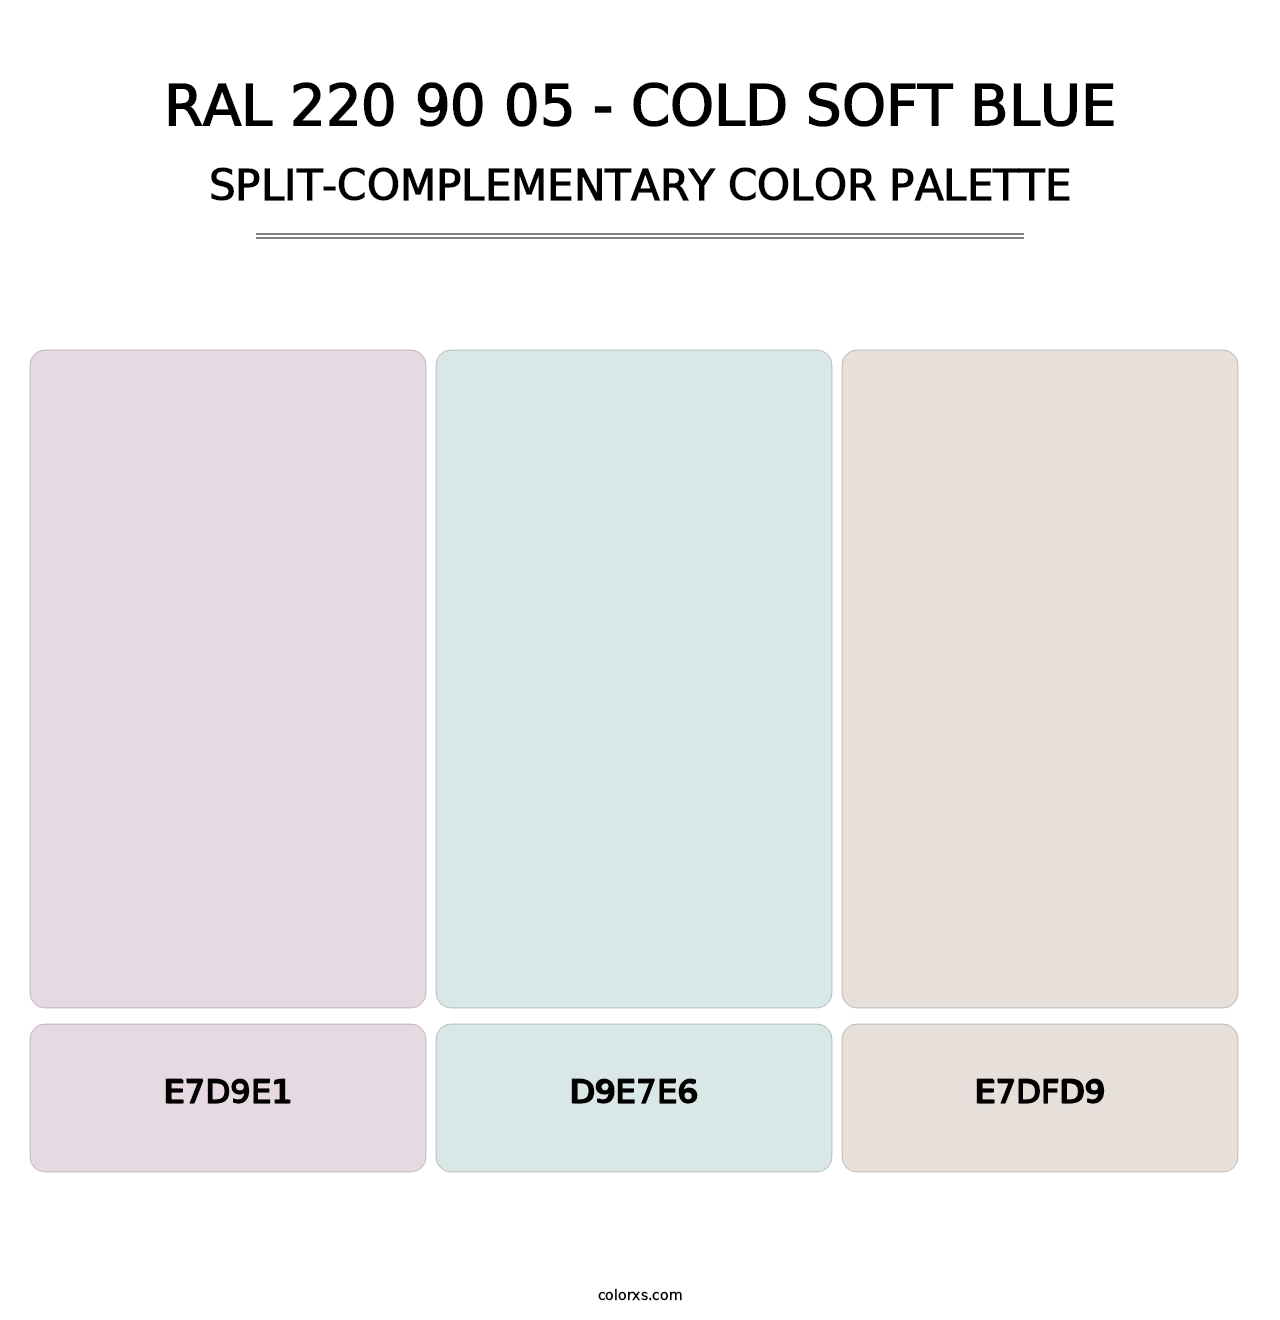 RAL 220 90 05 - Cold Soft Blue - Split-Complementary Color Palette